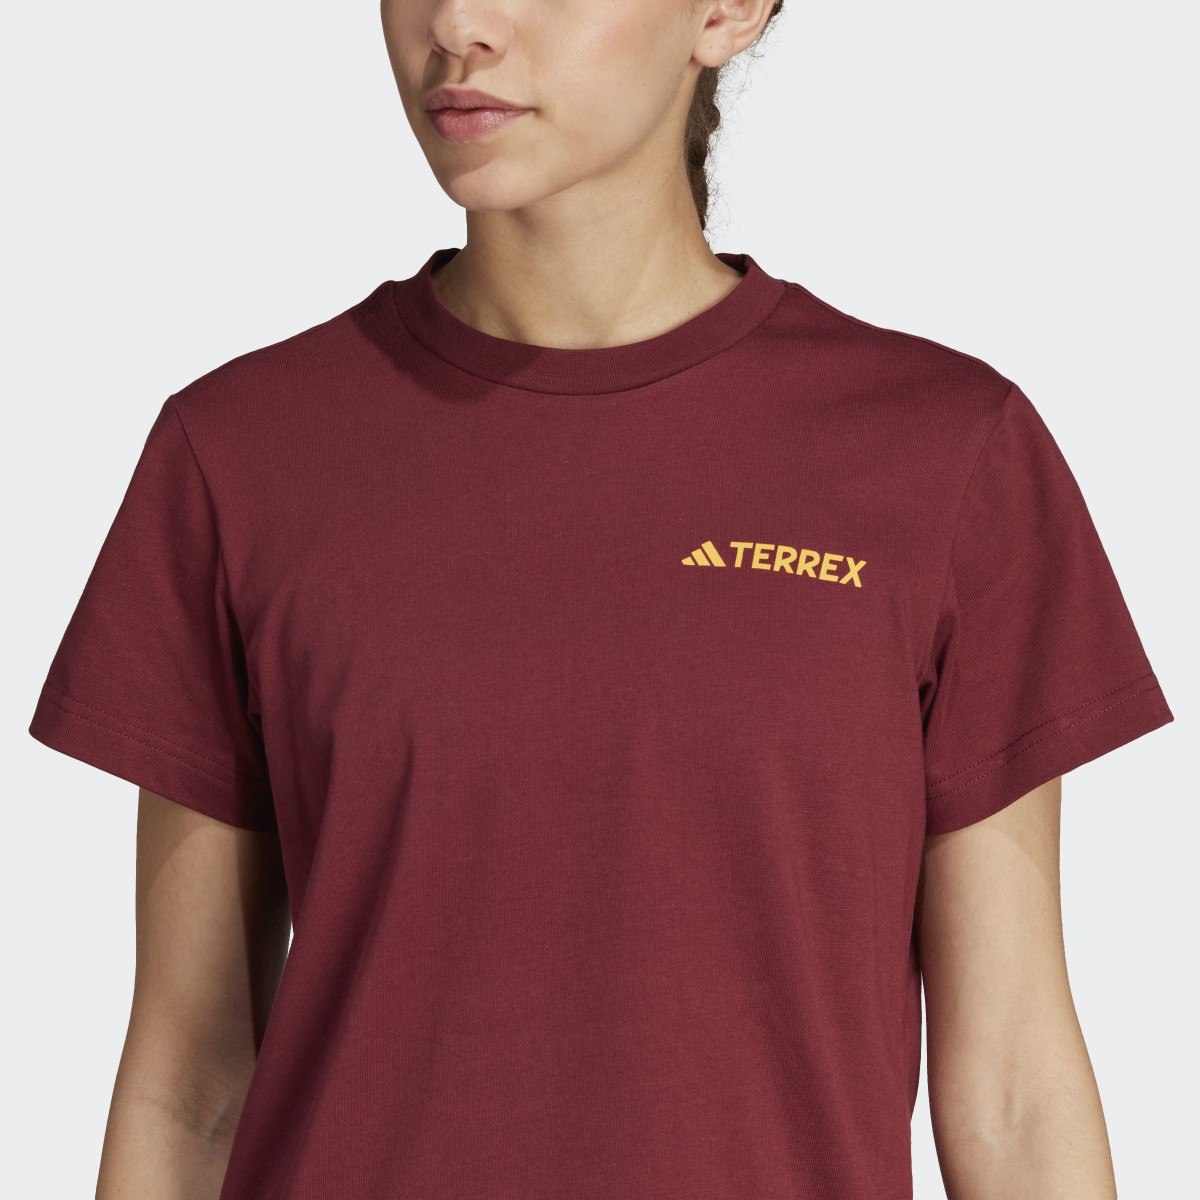 Adidas T-shirt Altitude TERREX. 6